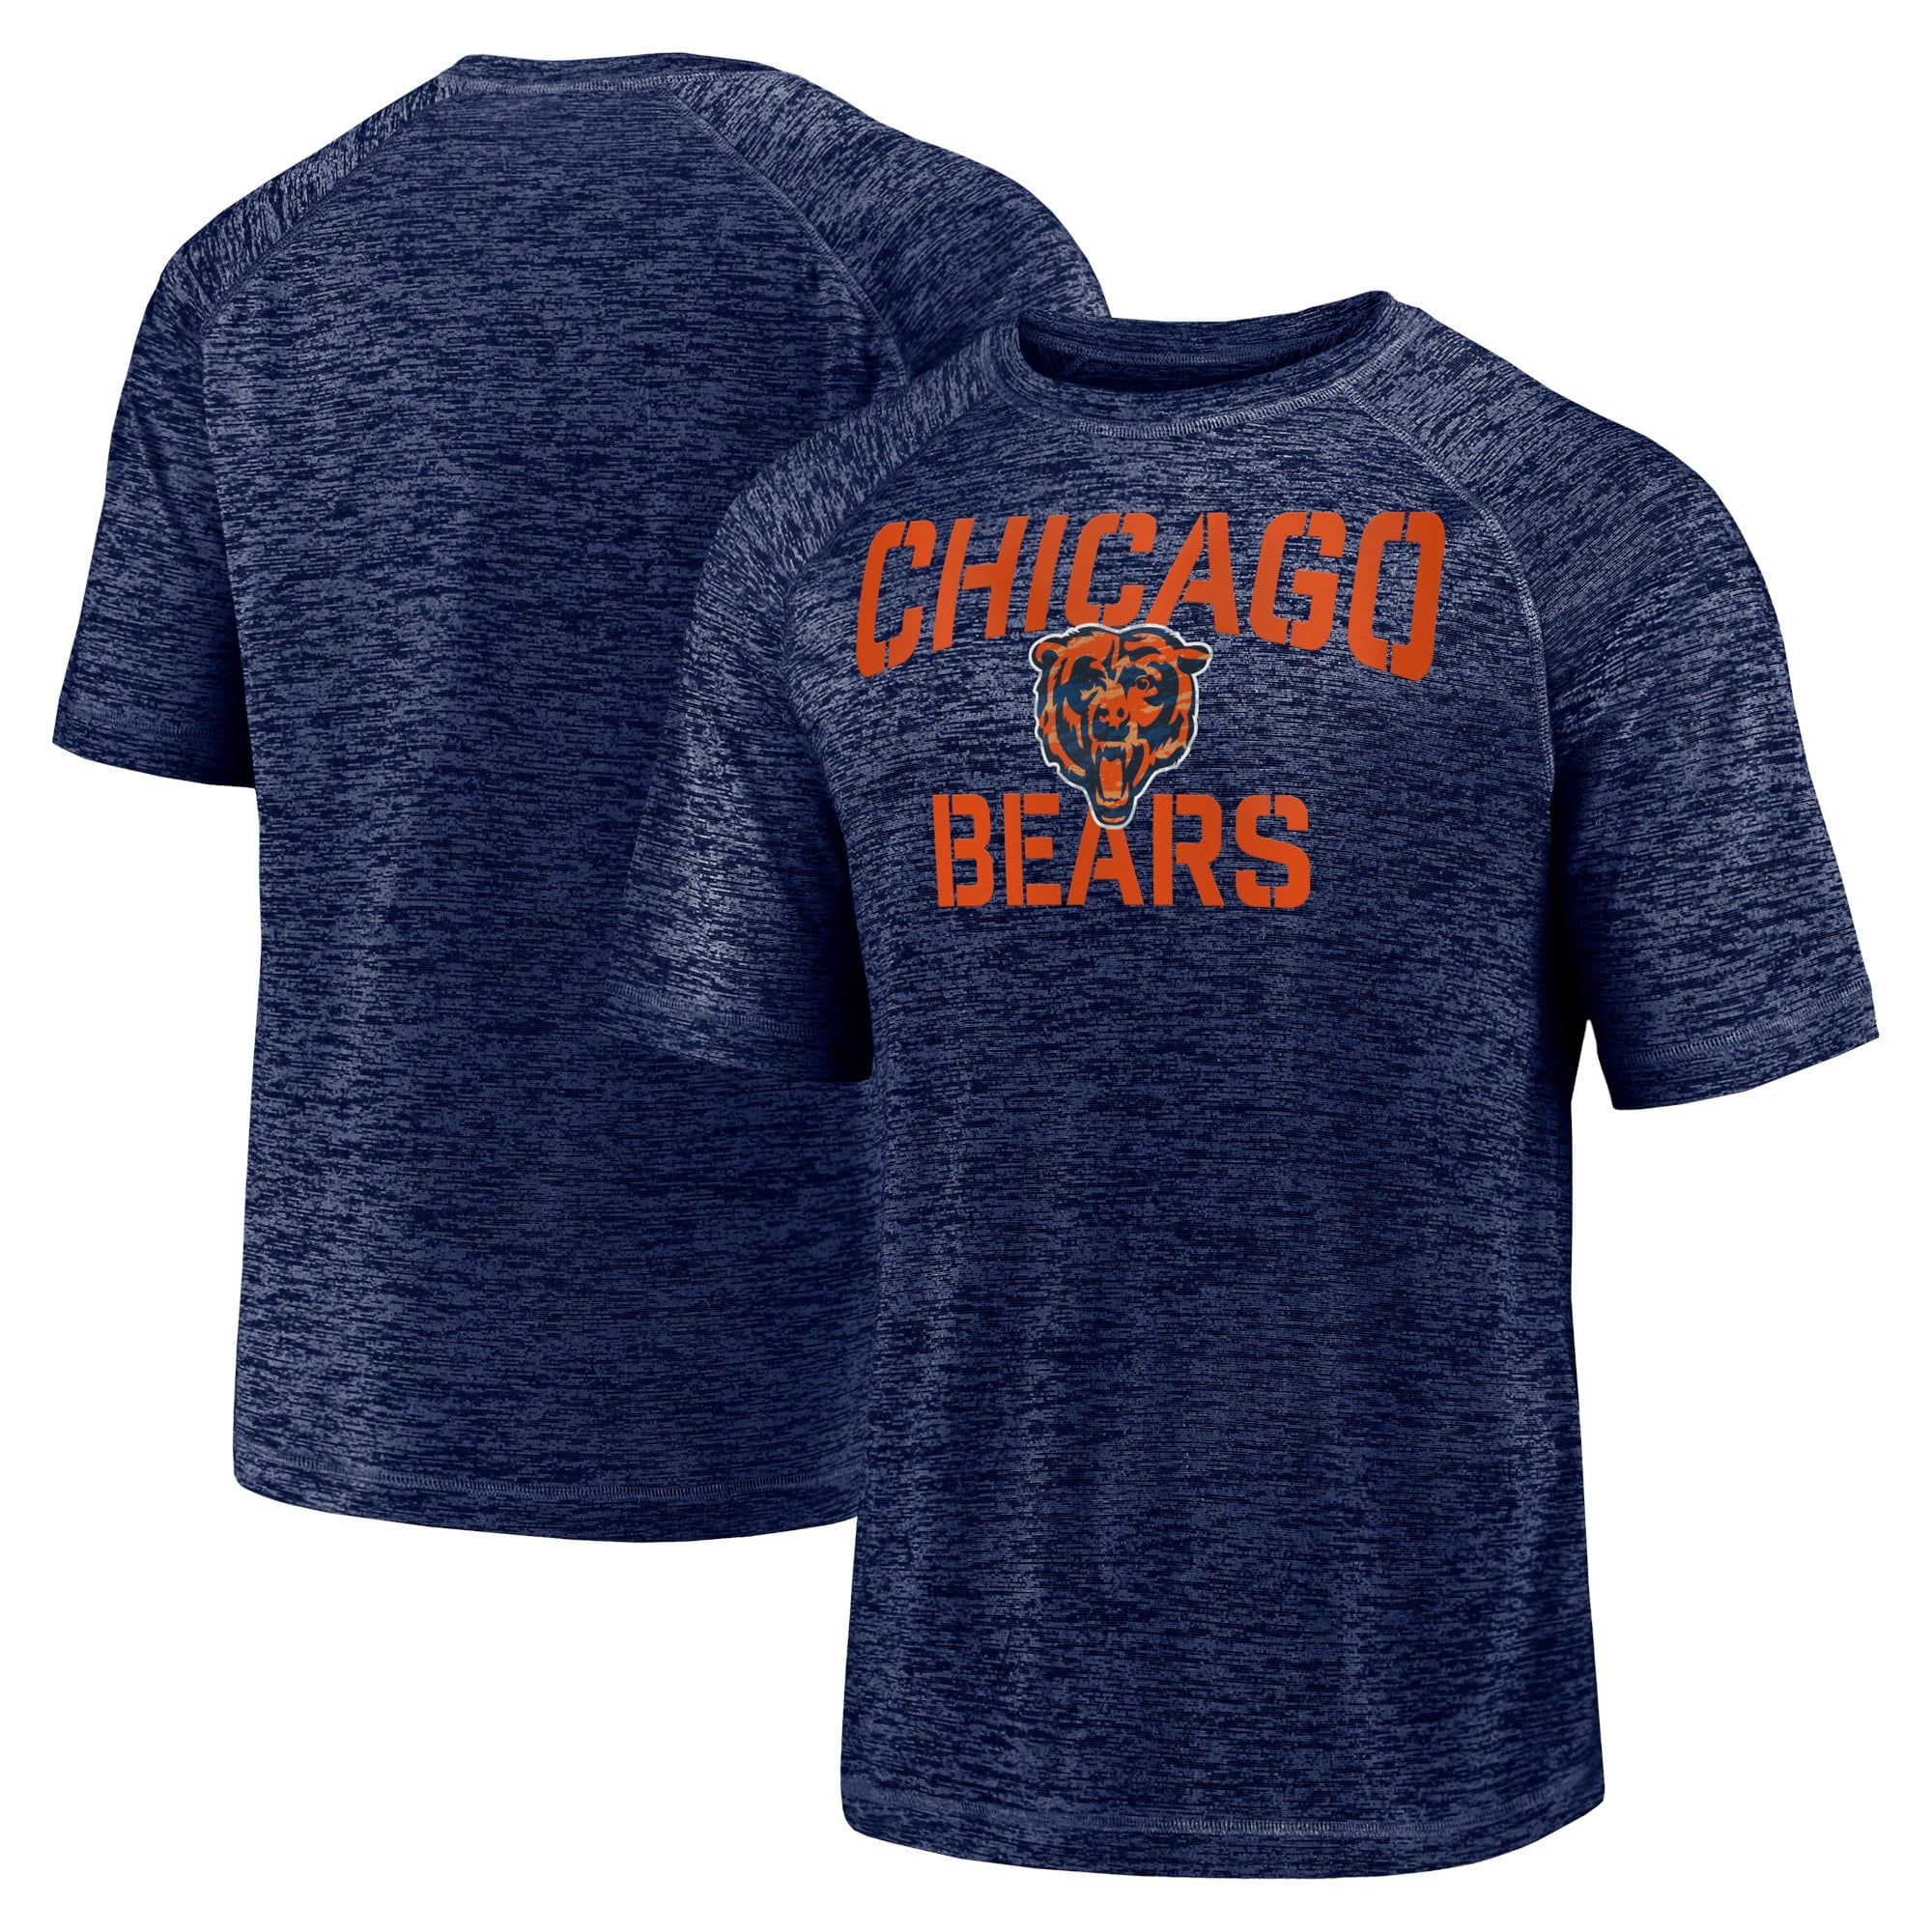 Chicago Bears T-Shirts - Walmart.com